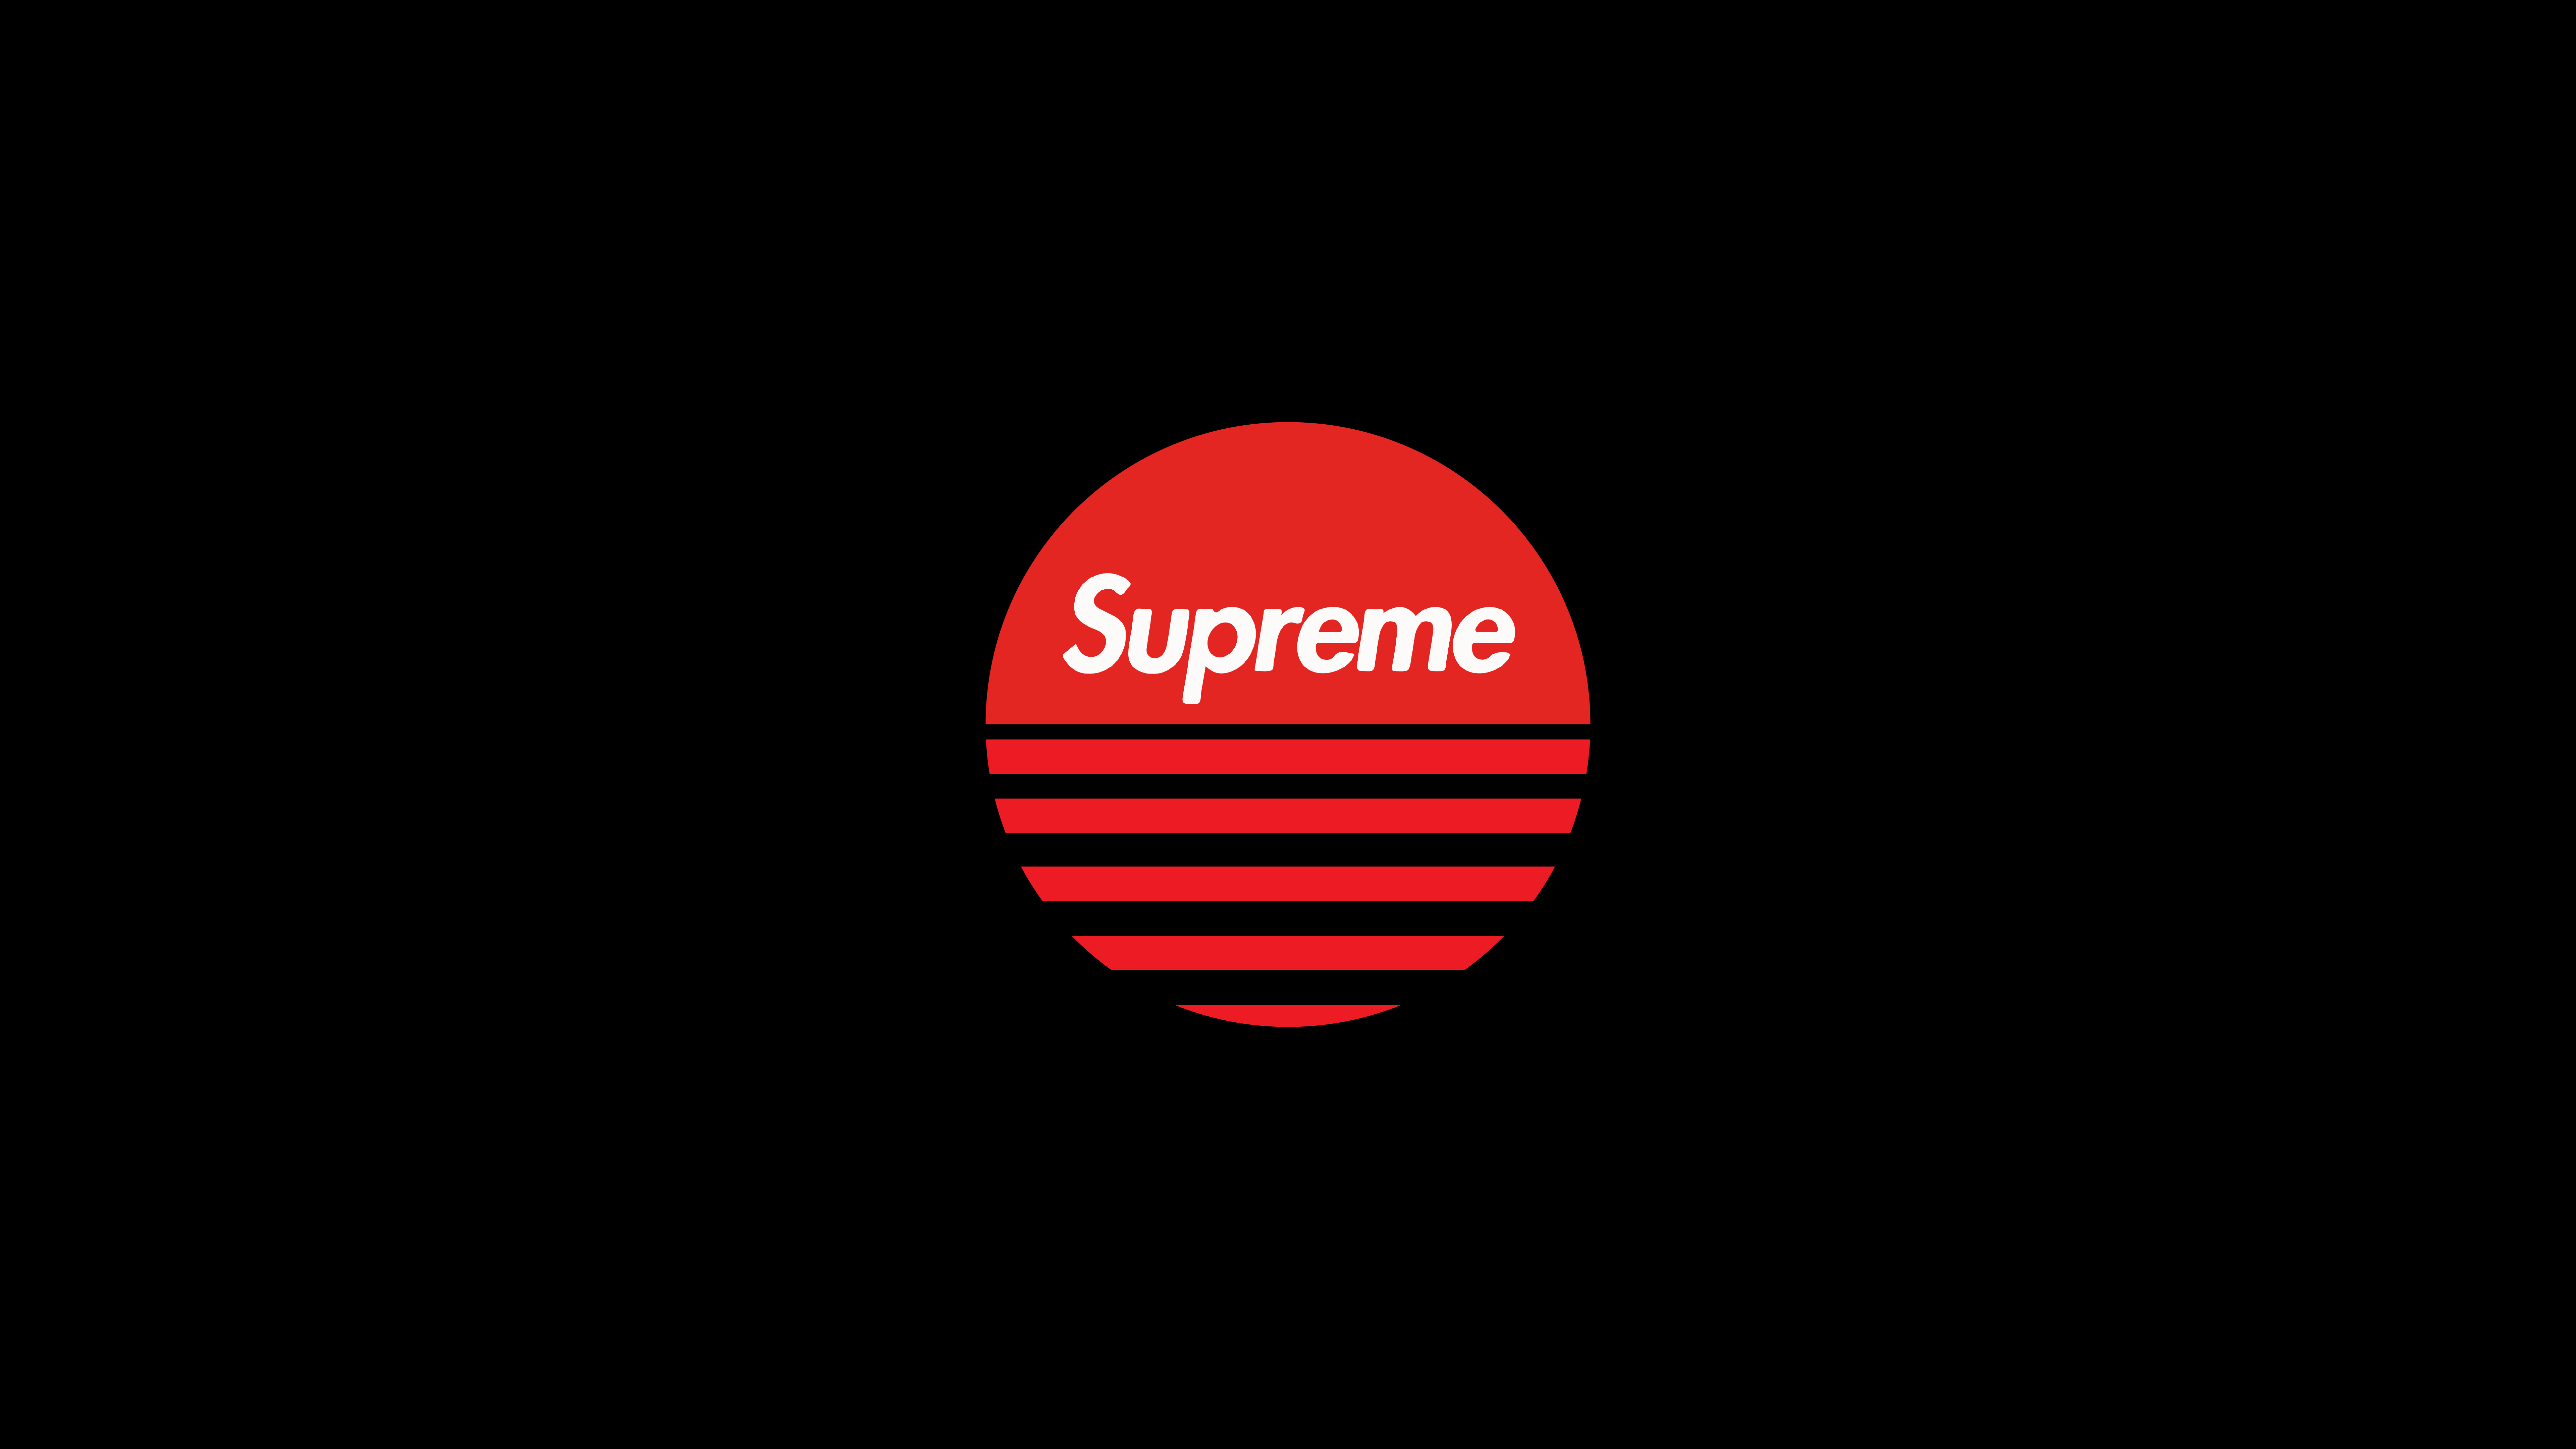 Supreme Brands 7680x4320